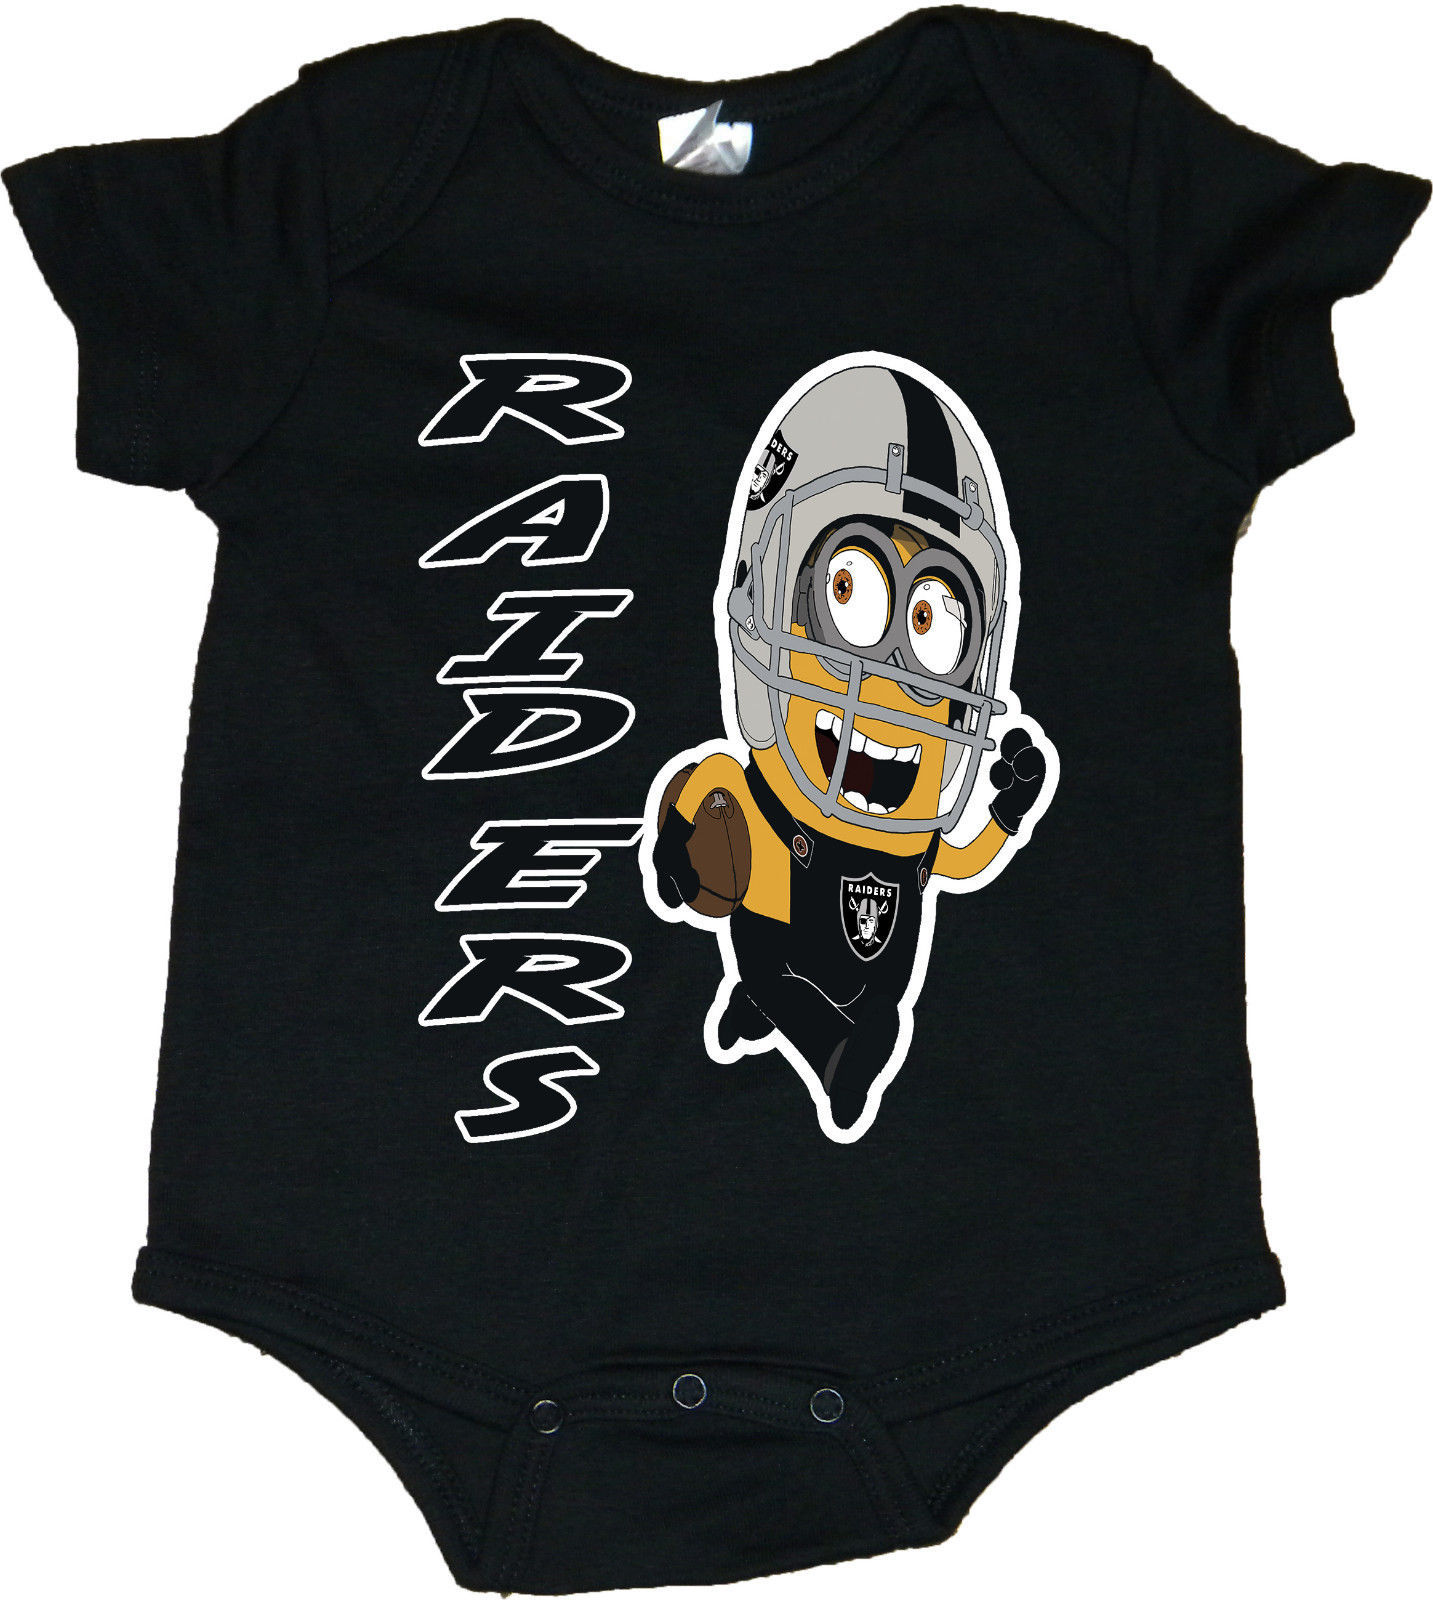 Raiders Miniom Baby Bodysuit/Creeper